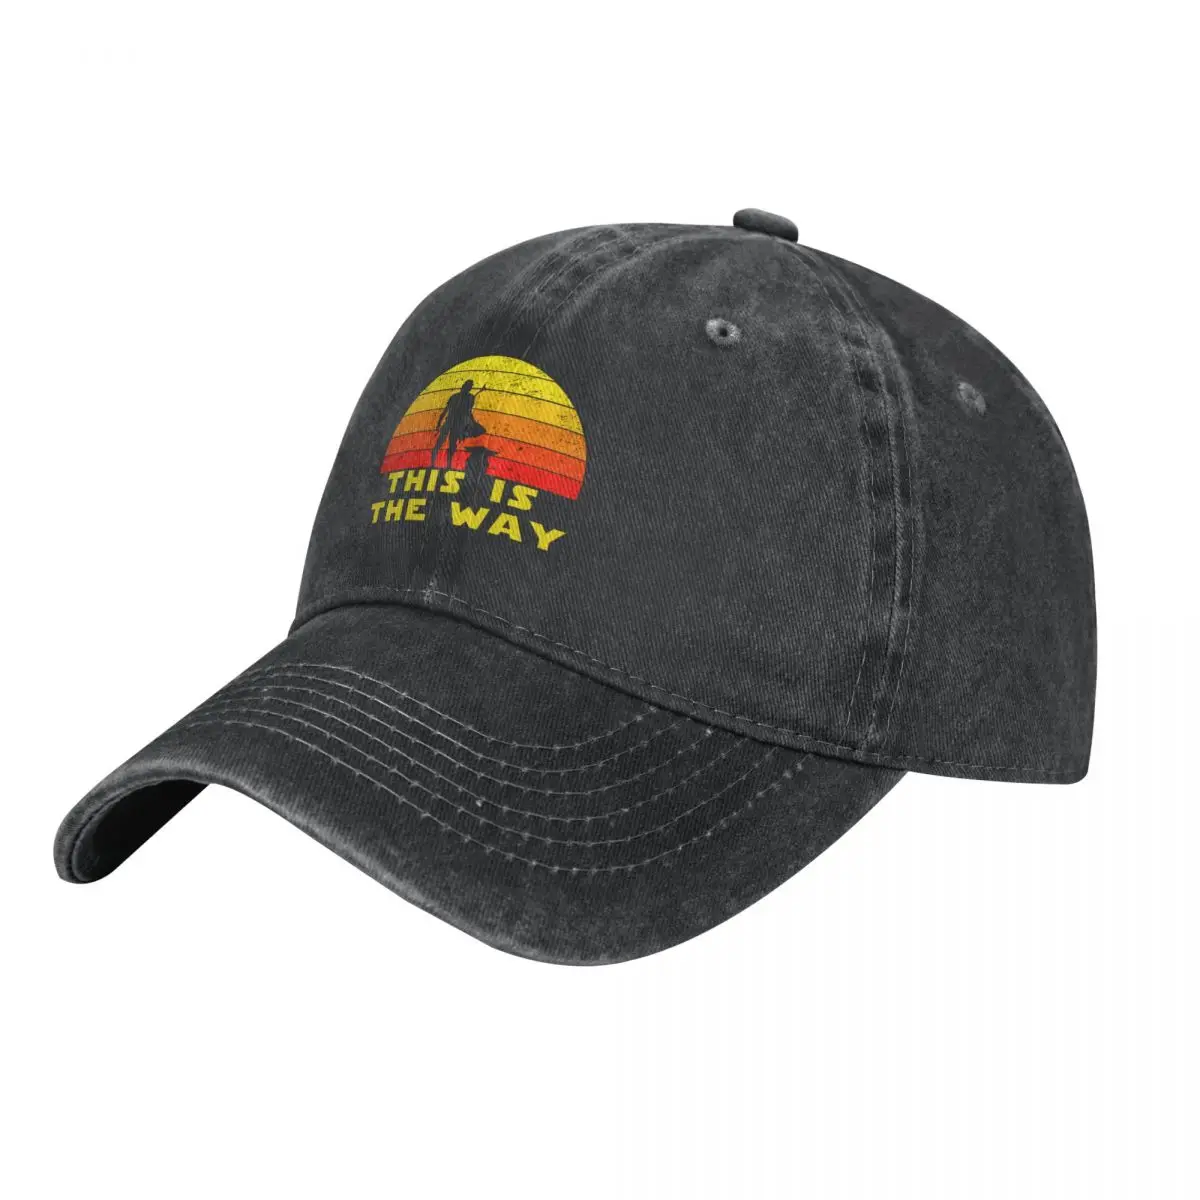 

Mando Retro This is The Way ( variant ) Cowboy Hat Fishing cap summer hat Beach Bag For Men Women's